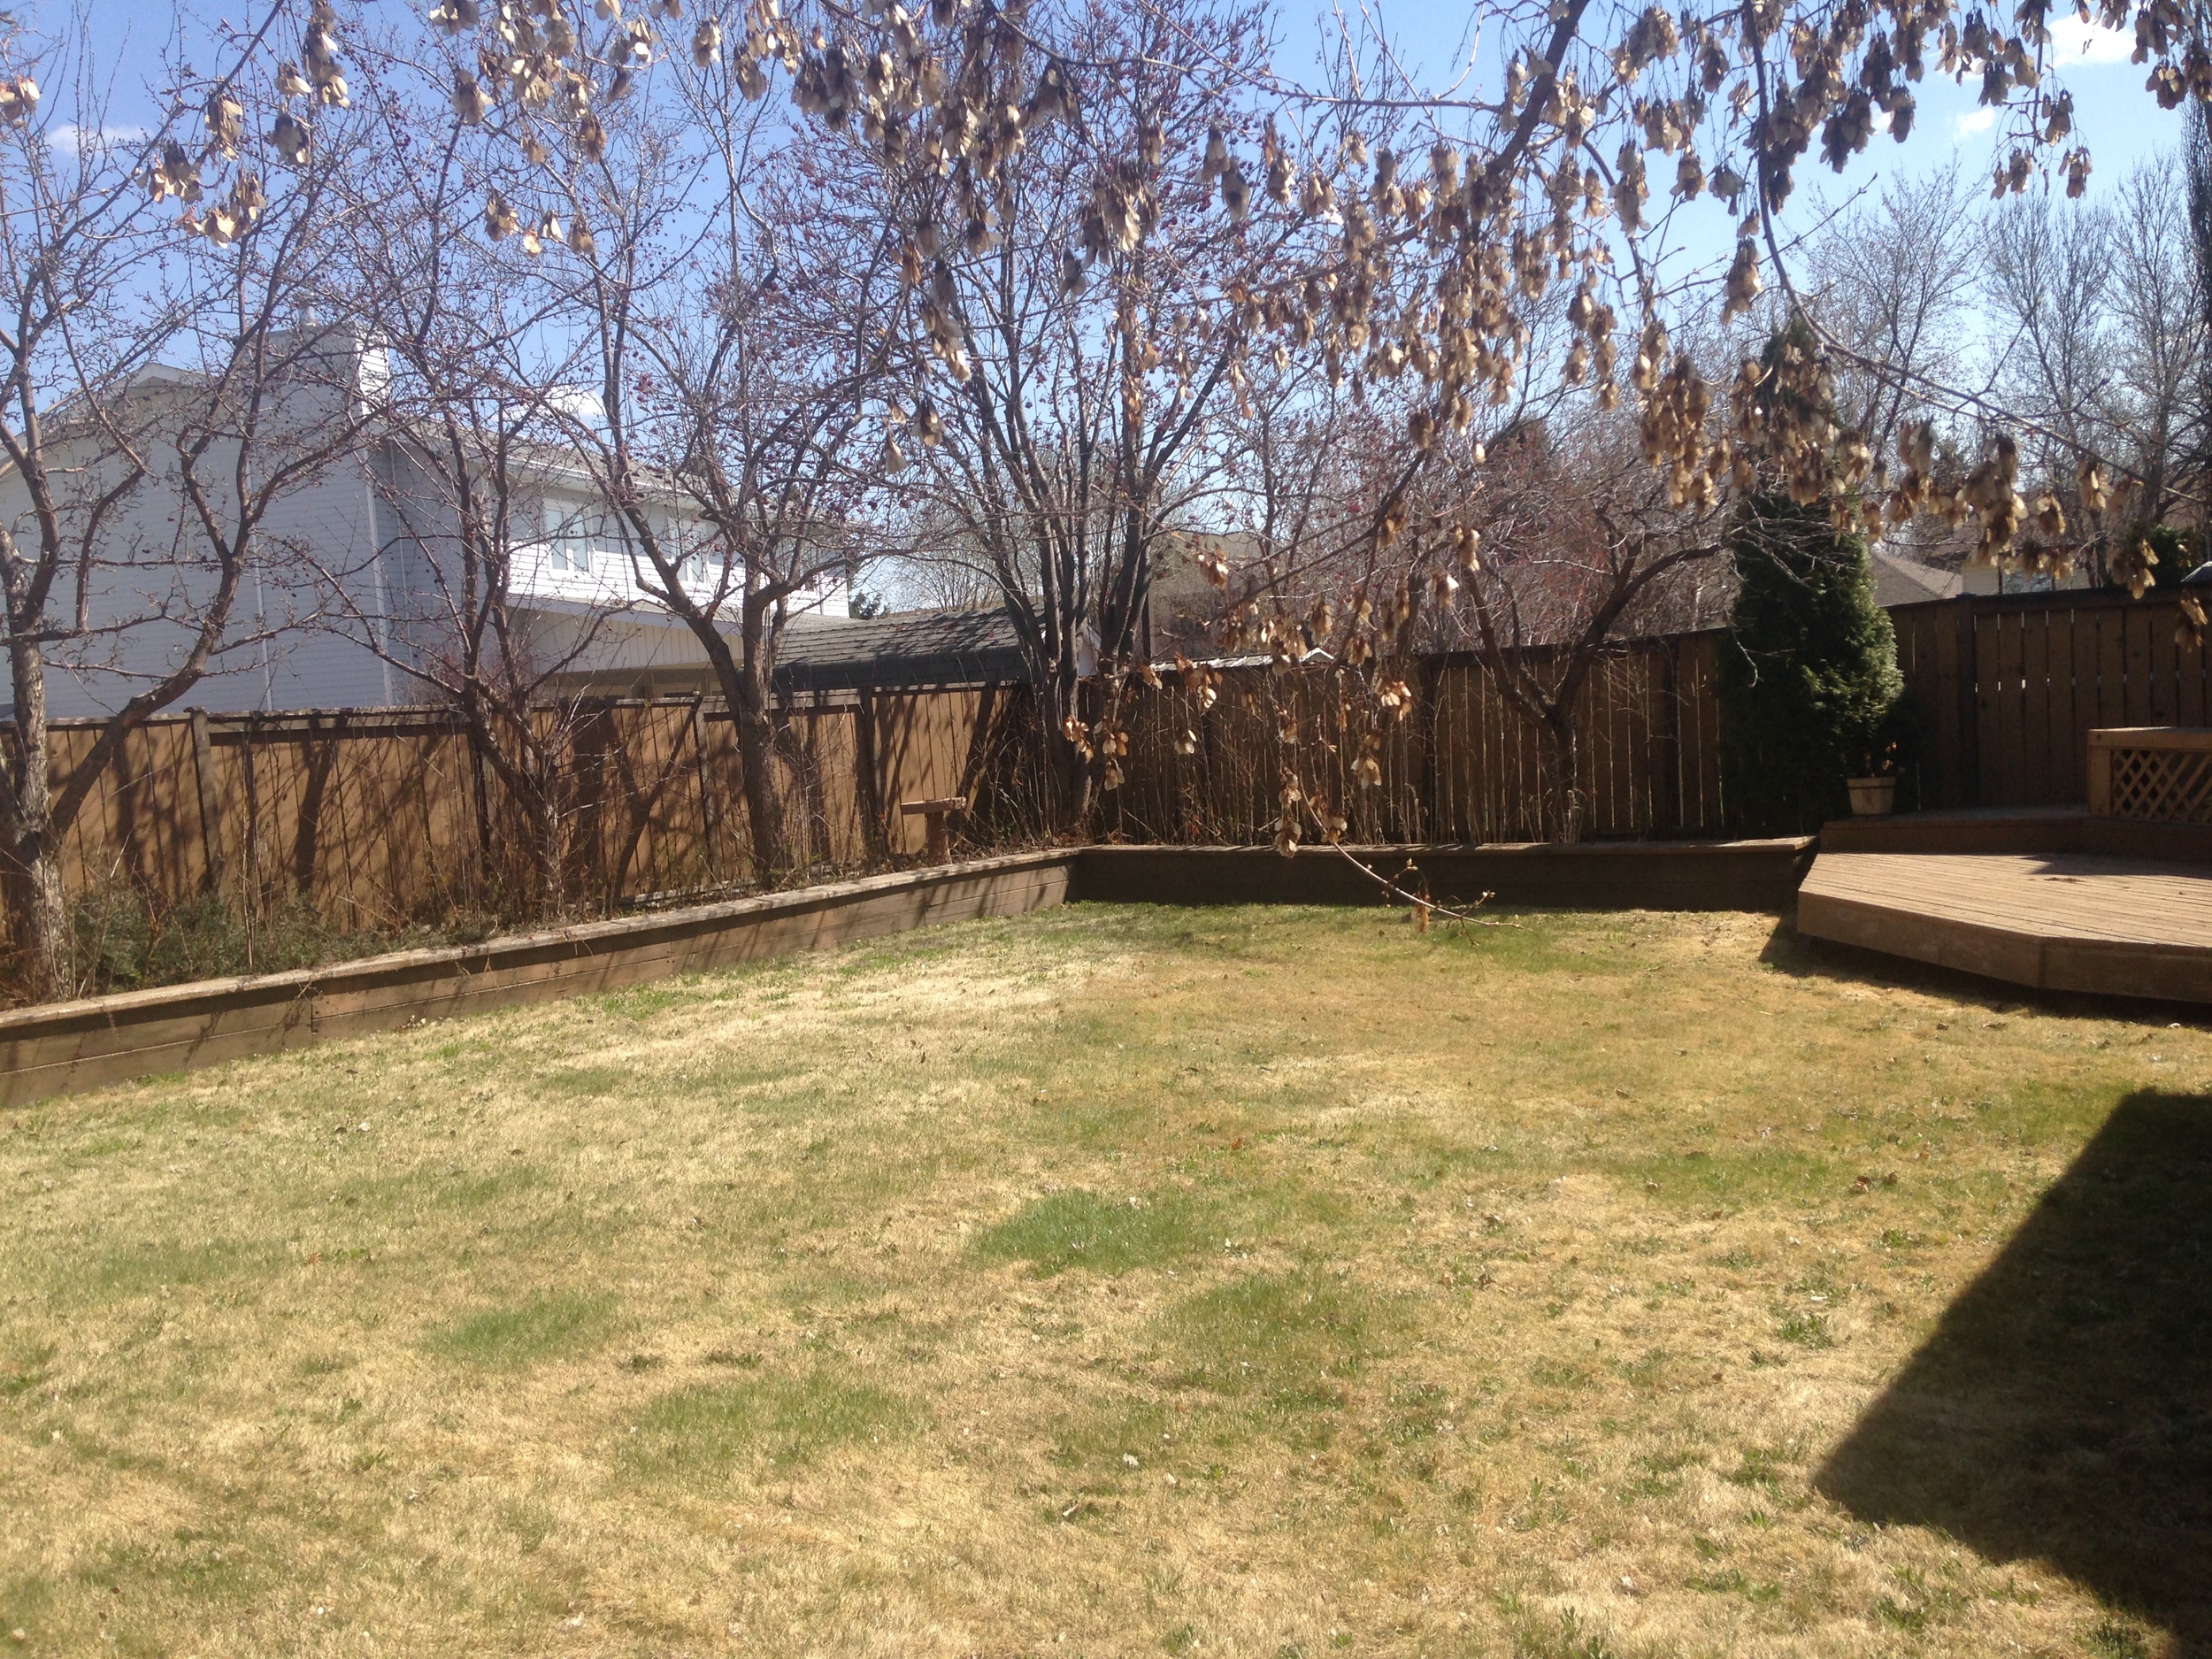 The Big Backyard - Spring time